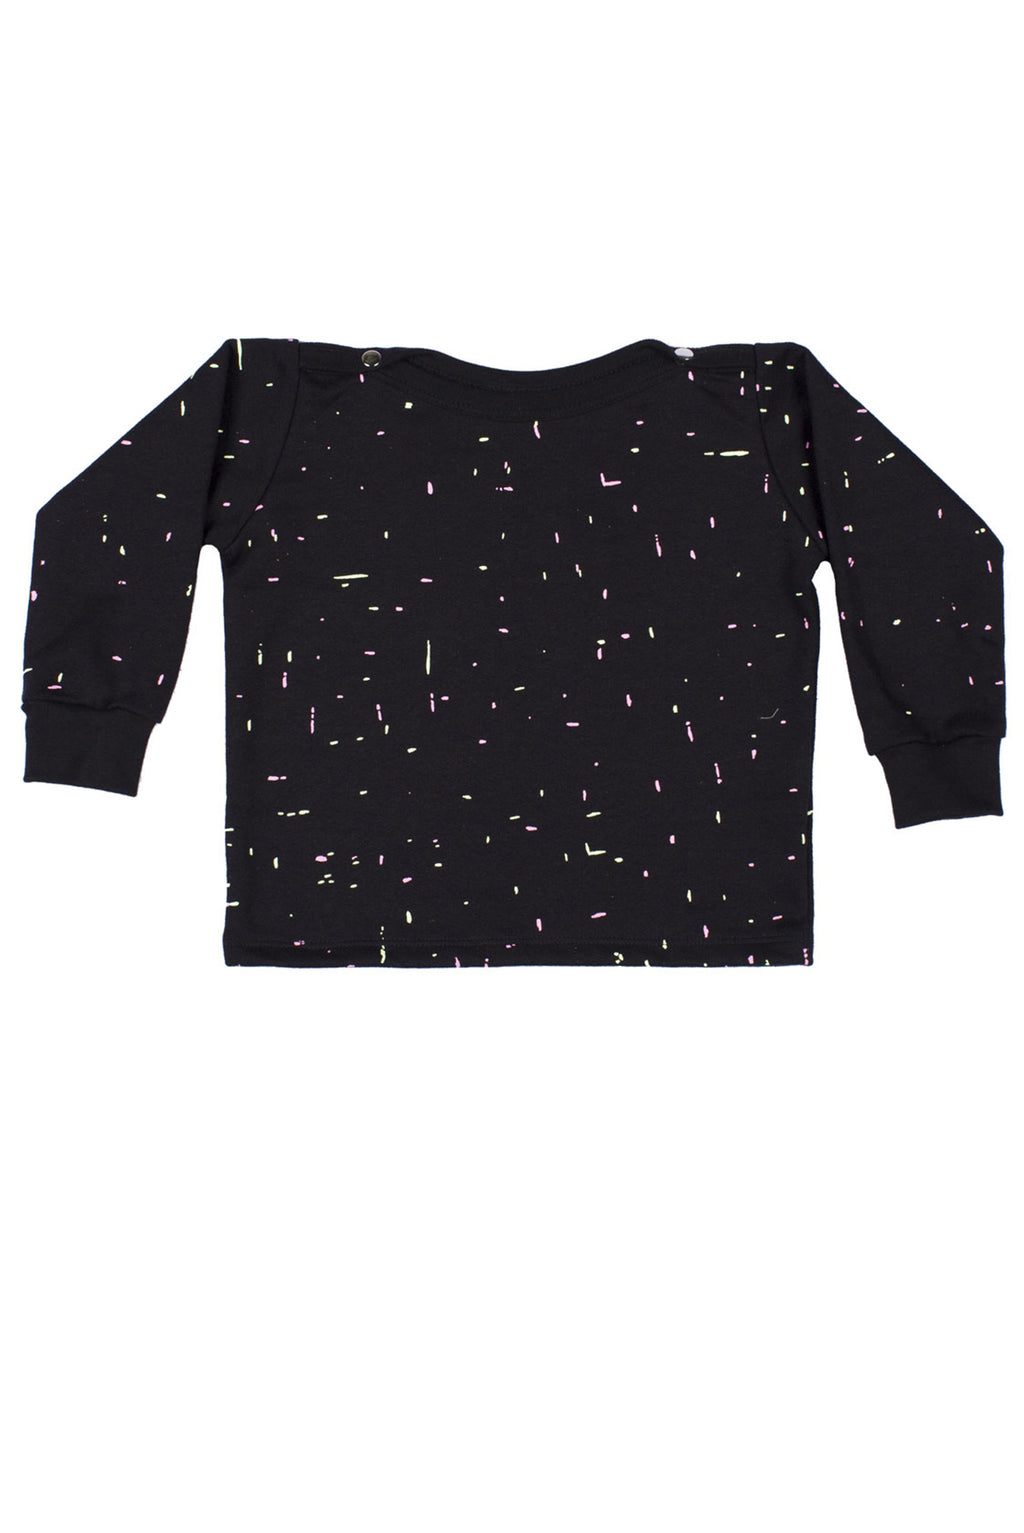 Speckle Baby Sweater Black - Zuttion